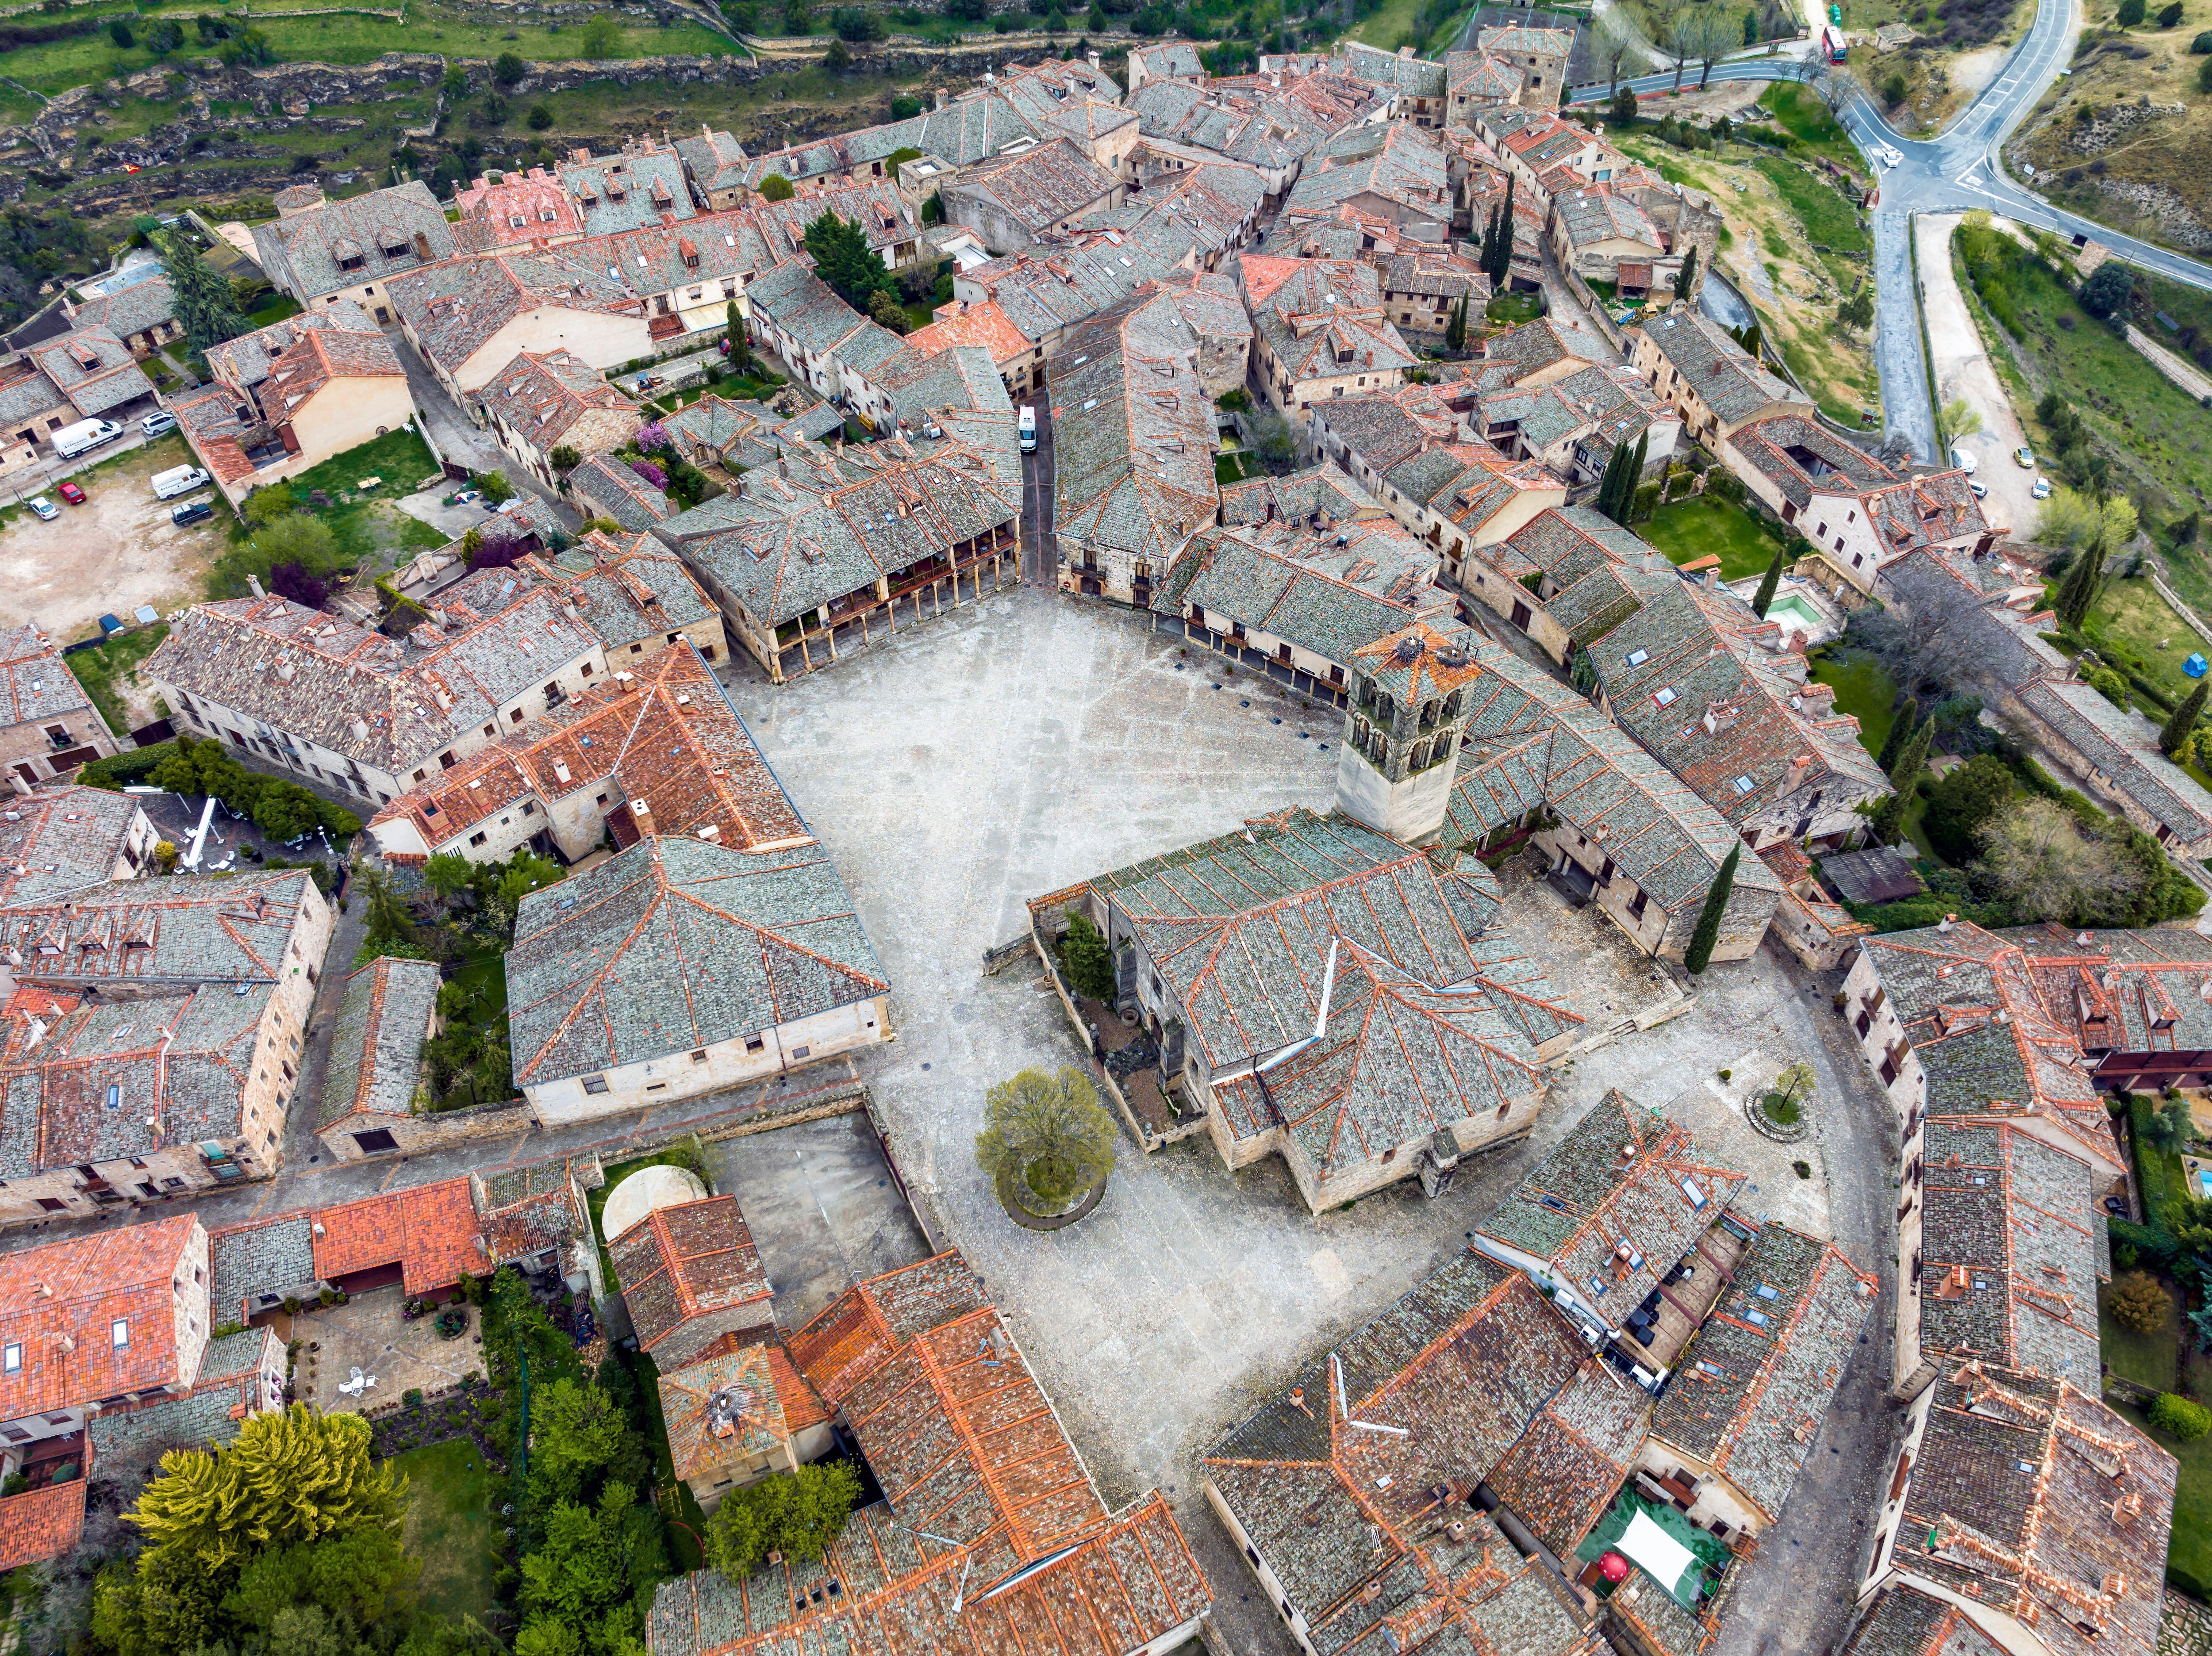 Vista aérea de la villa medieval de Pedraza (Segovia).